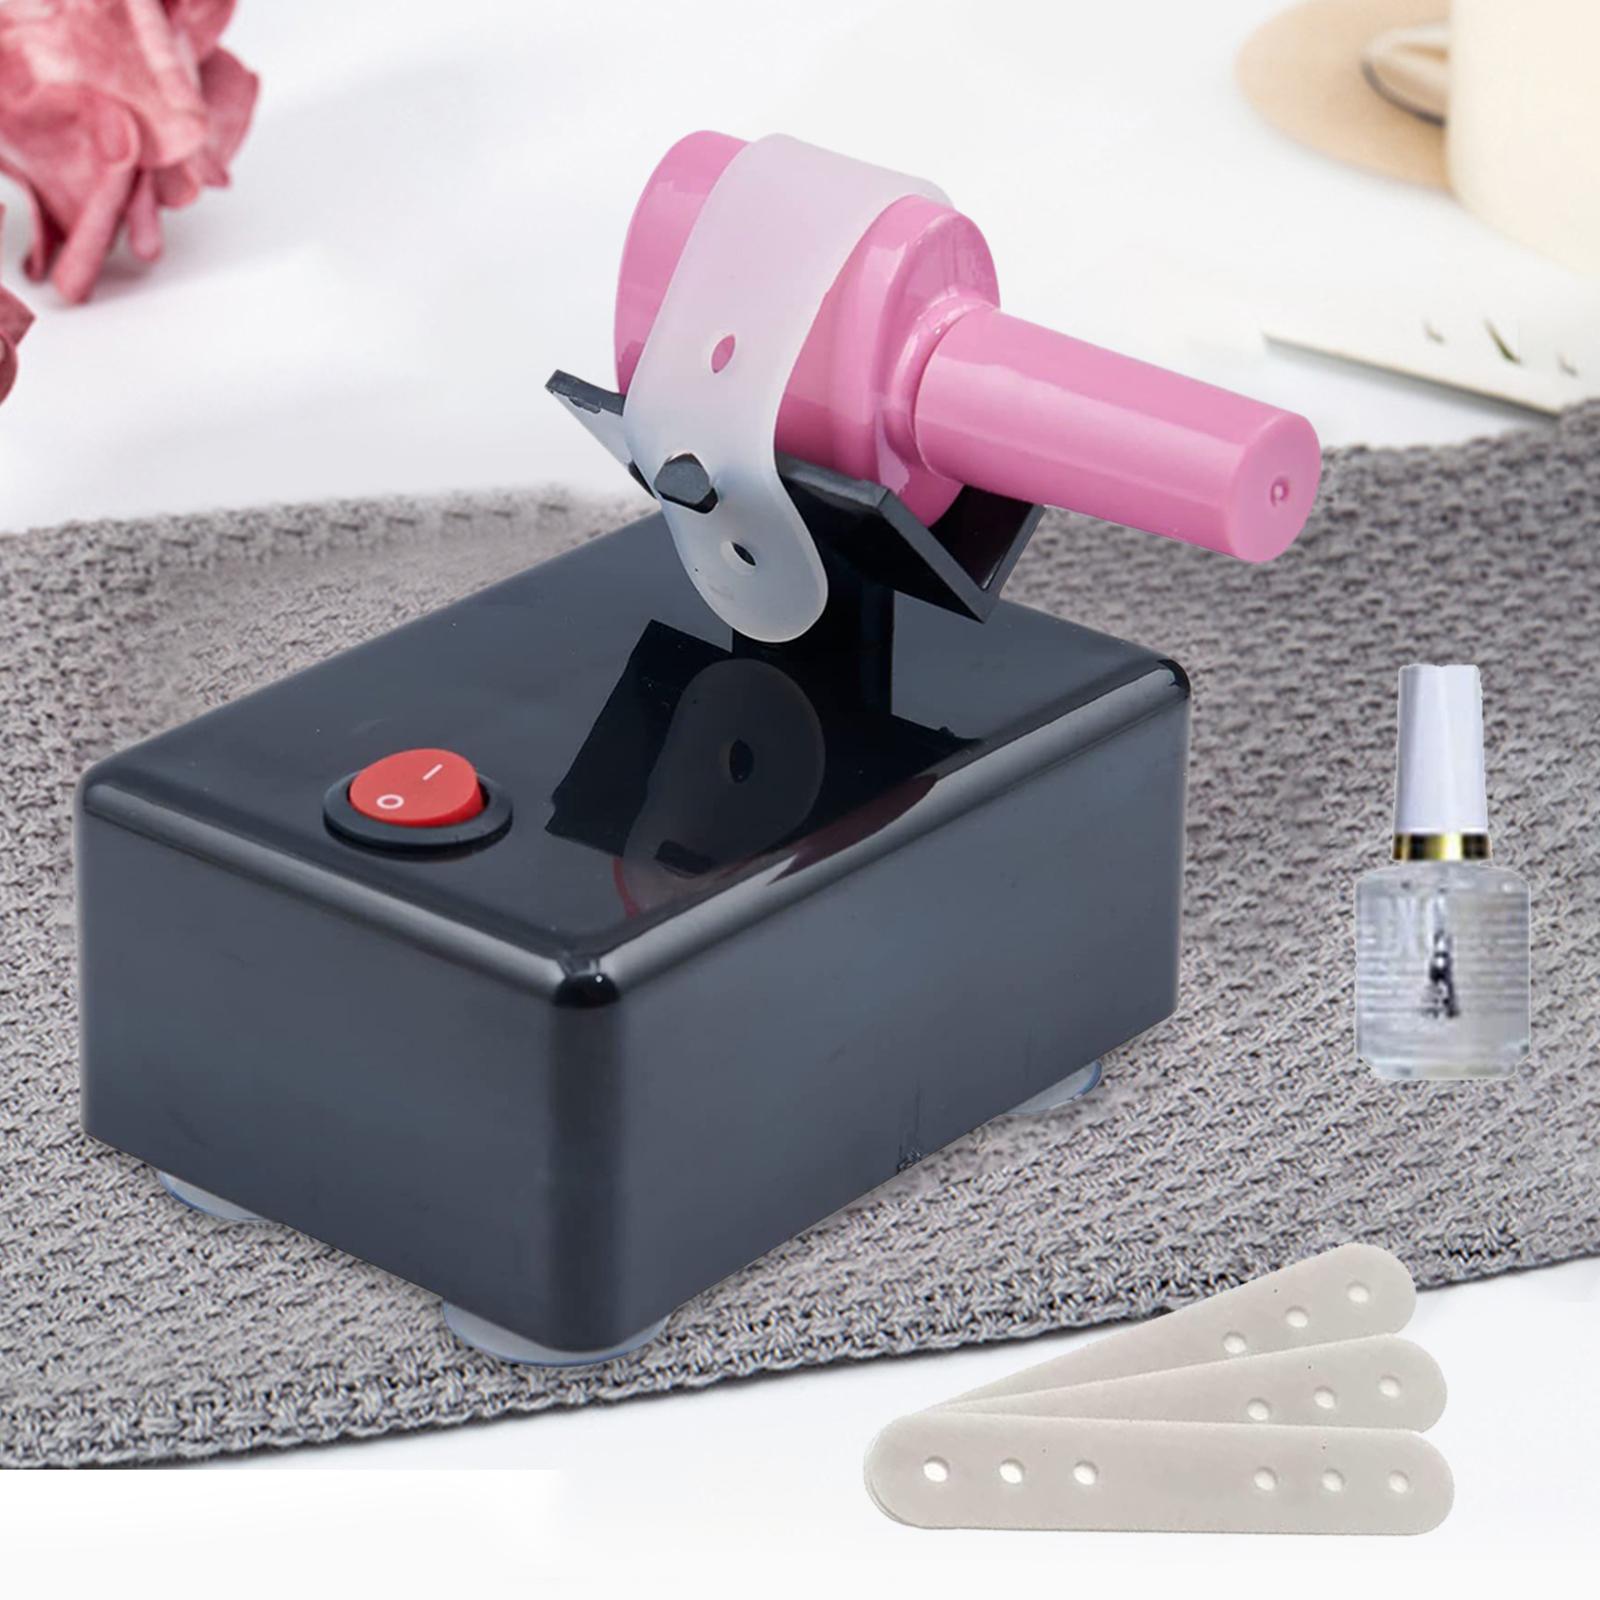 Nail Polish Shaker Fits All Bottle Shapes Stirrer Adjustable for Nail Art